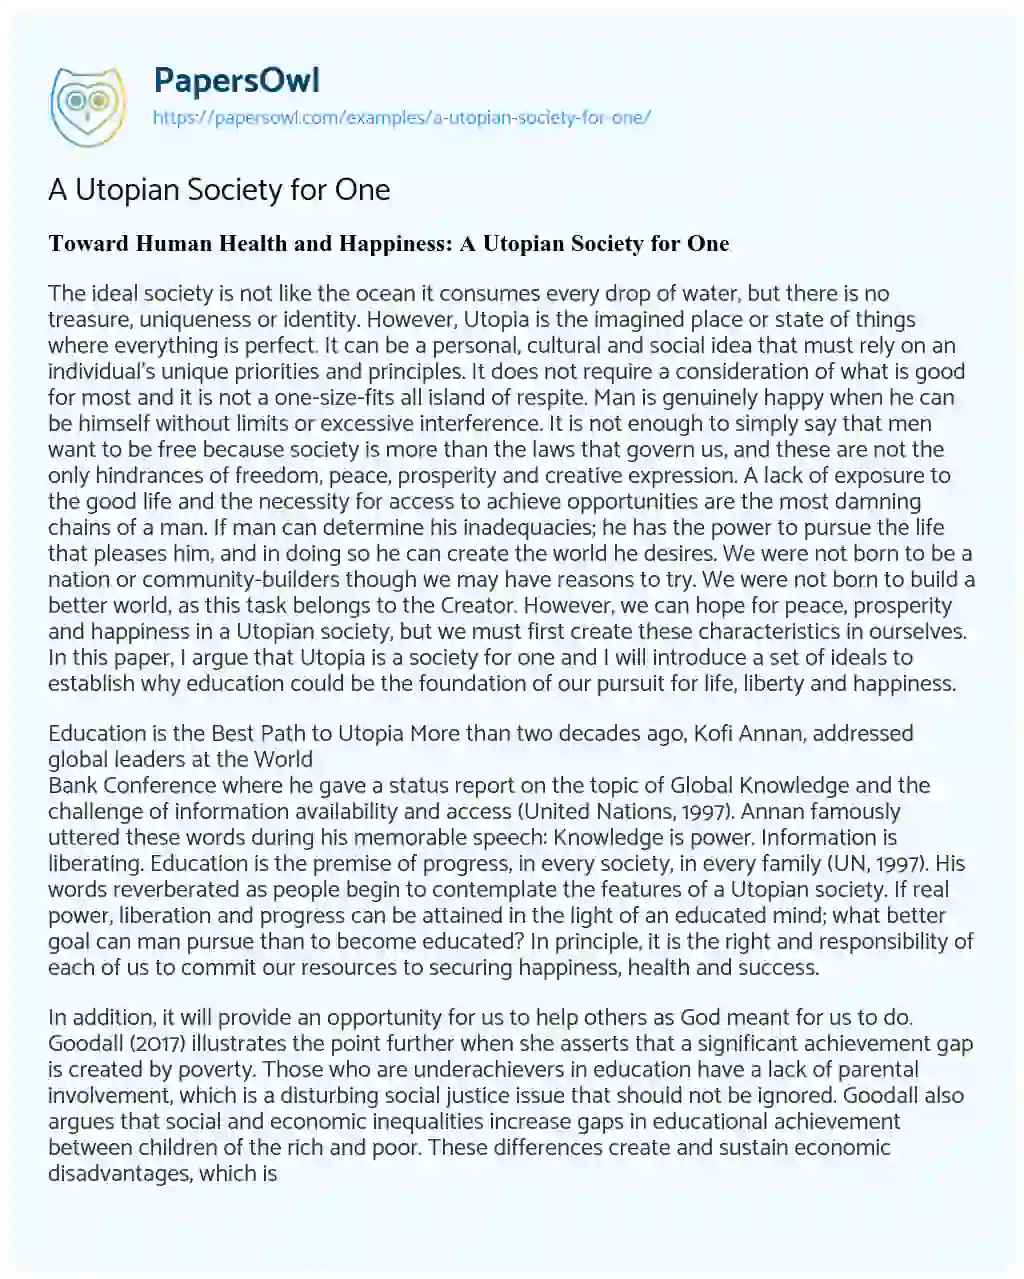 A Utopian Society for One essay